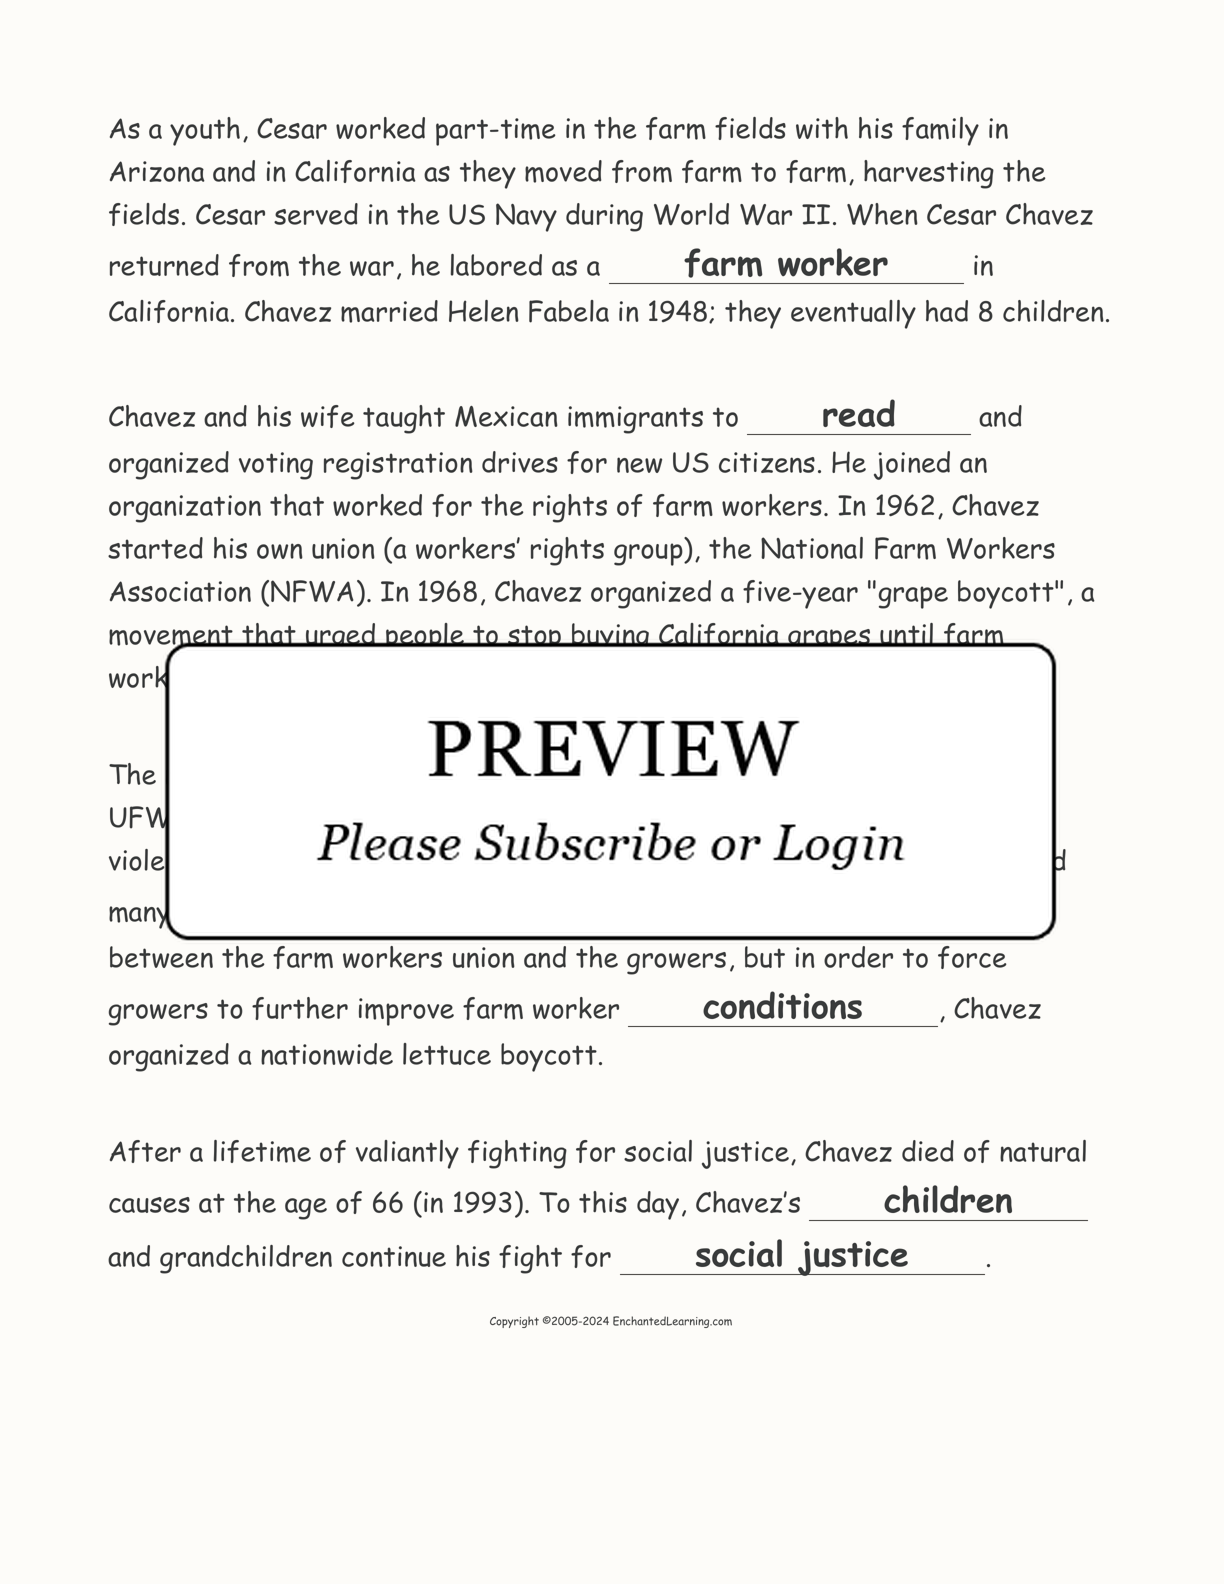 Cesar Chavez Biography: Cloze Activity interactive worksheet page 4